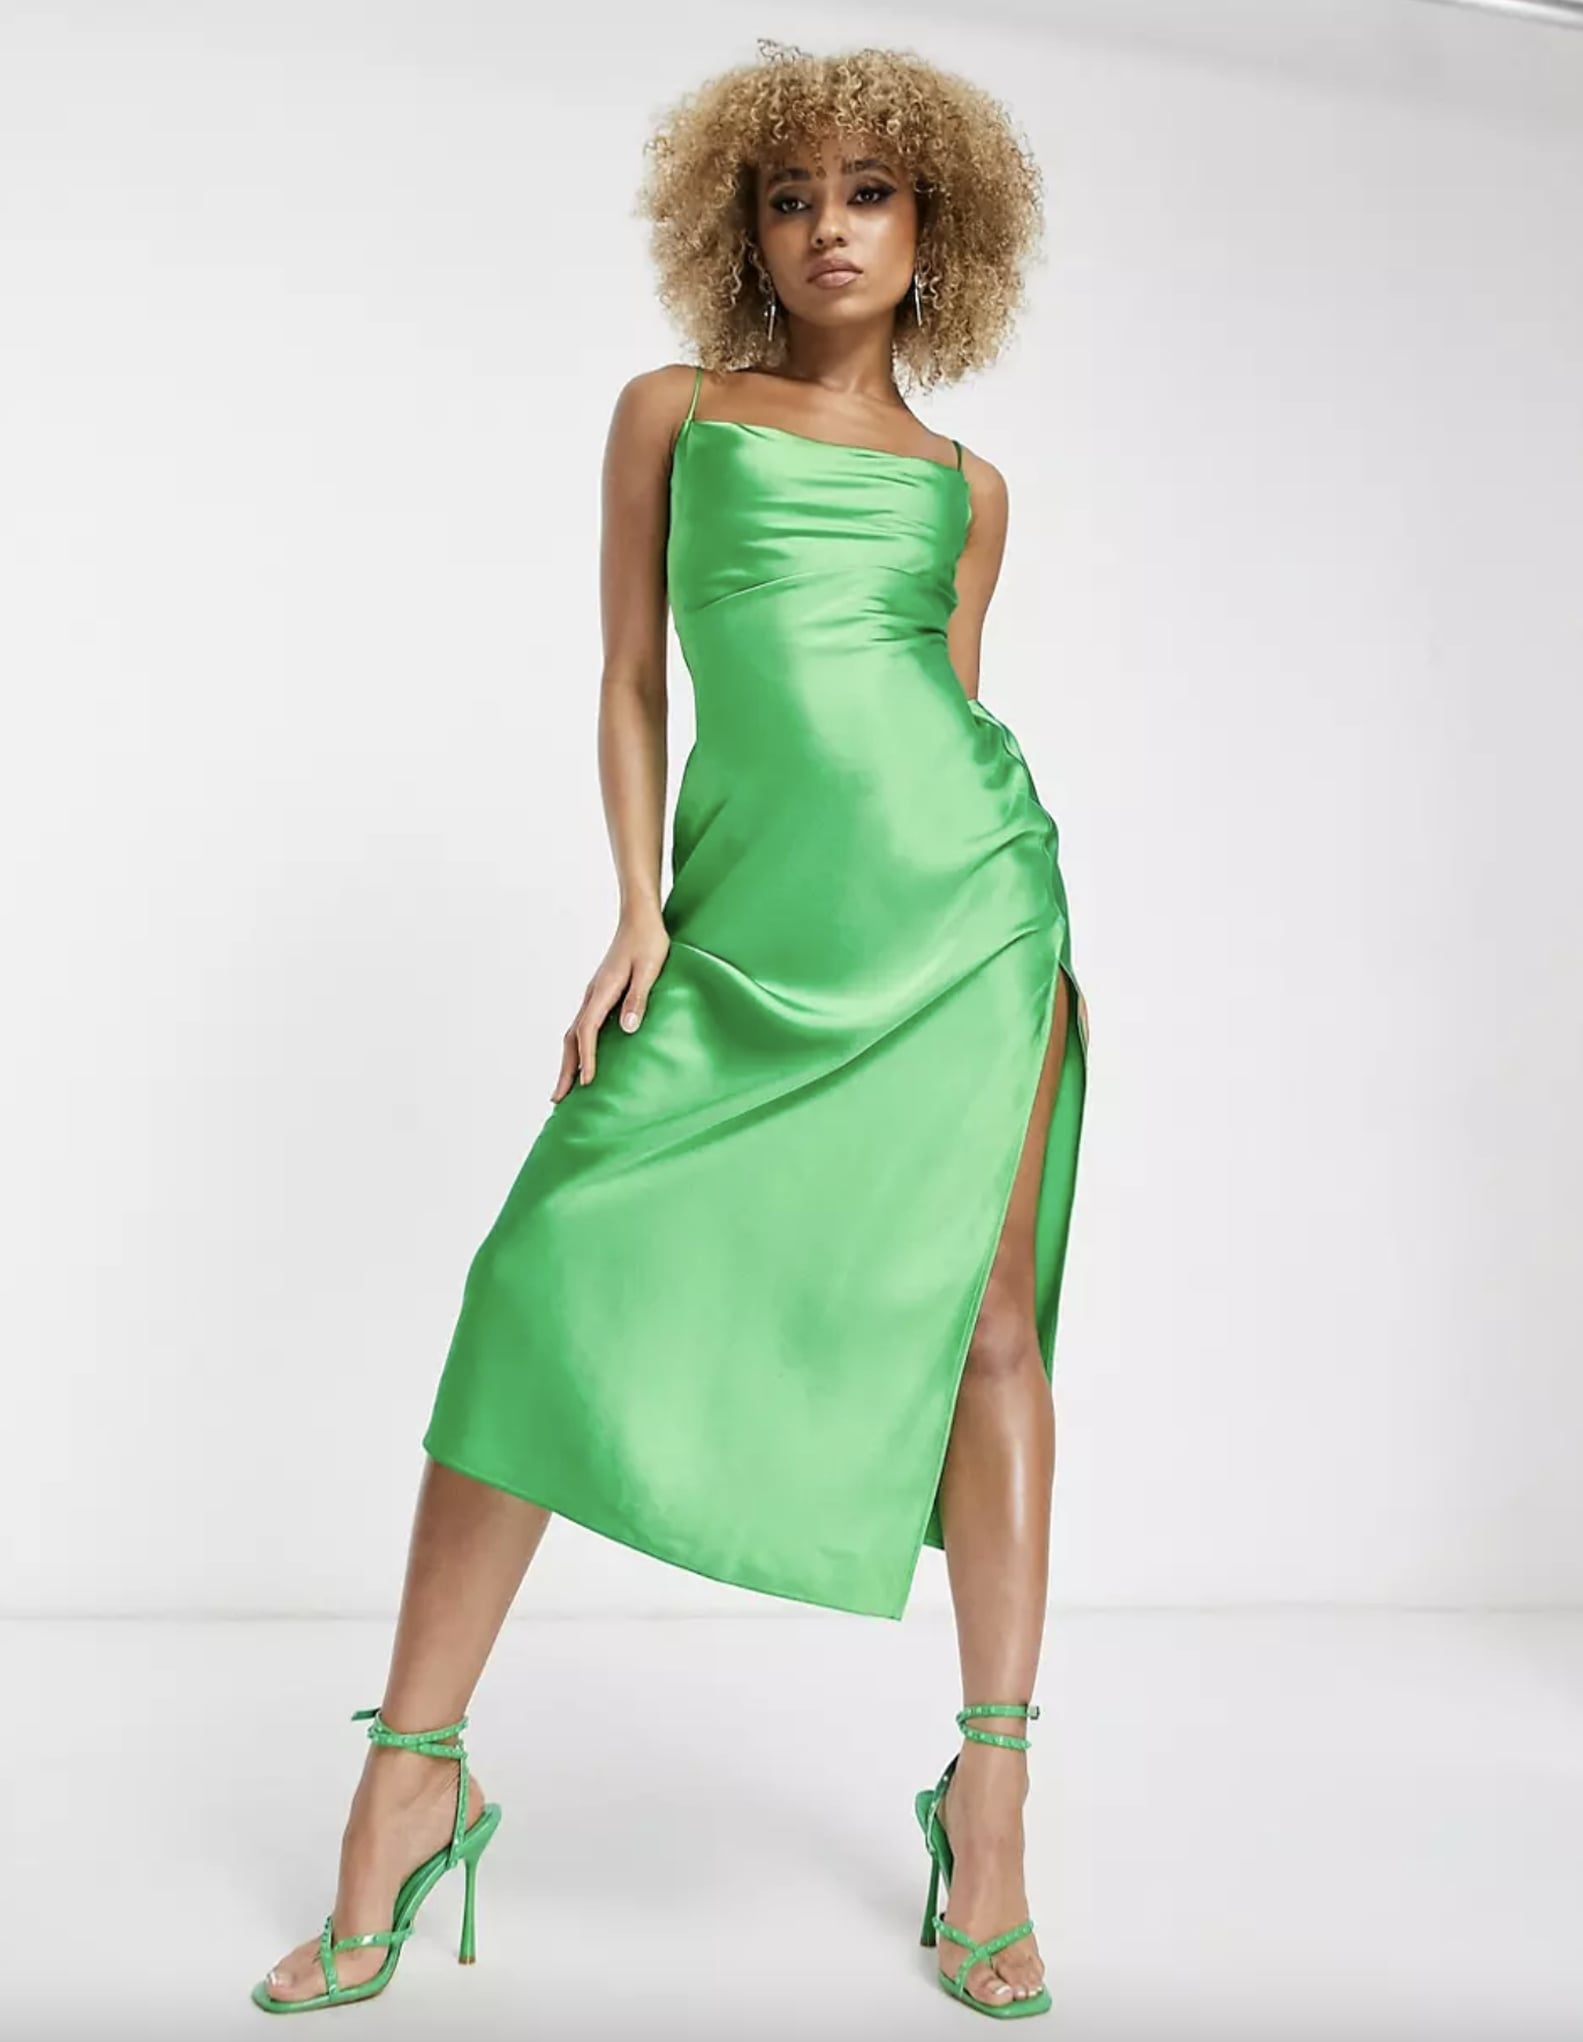 Chandler Kinney Wears Green Cutout Dress For 22nd Birthday | POPSUGAR ...